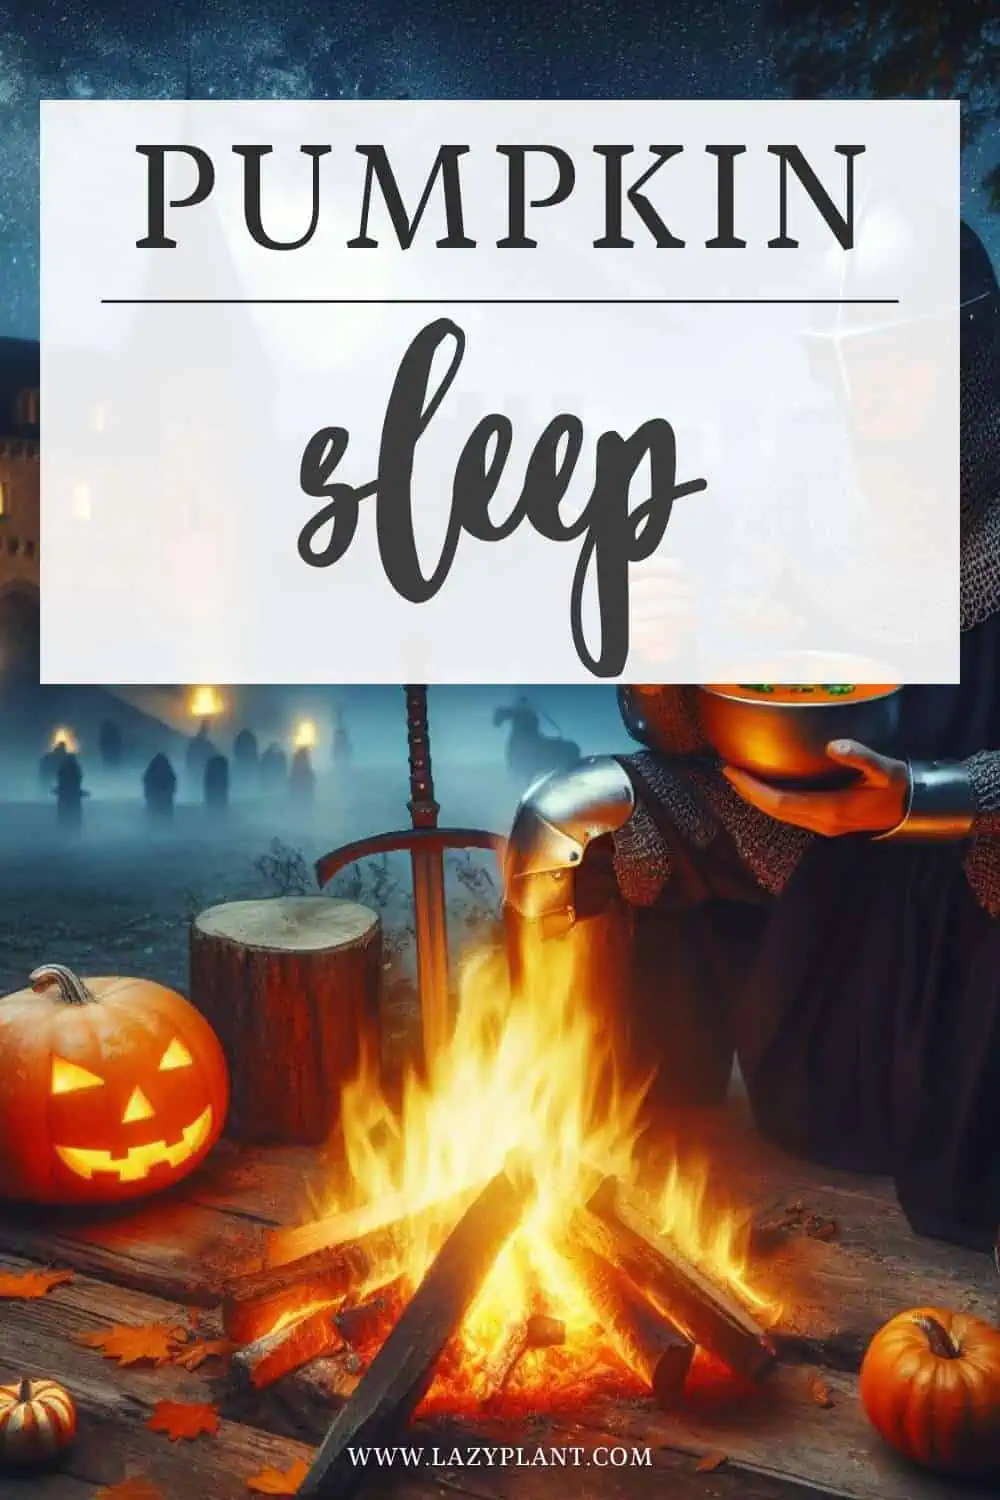 Benefits of Pumpkin for Sleep